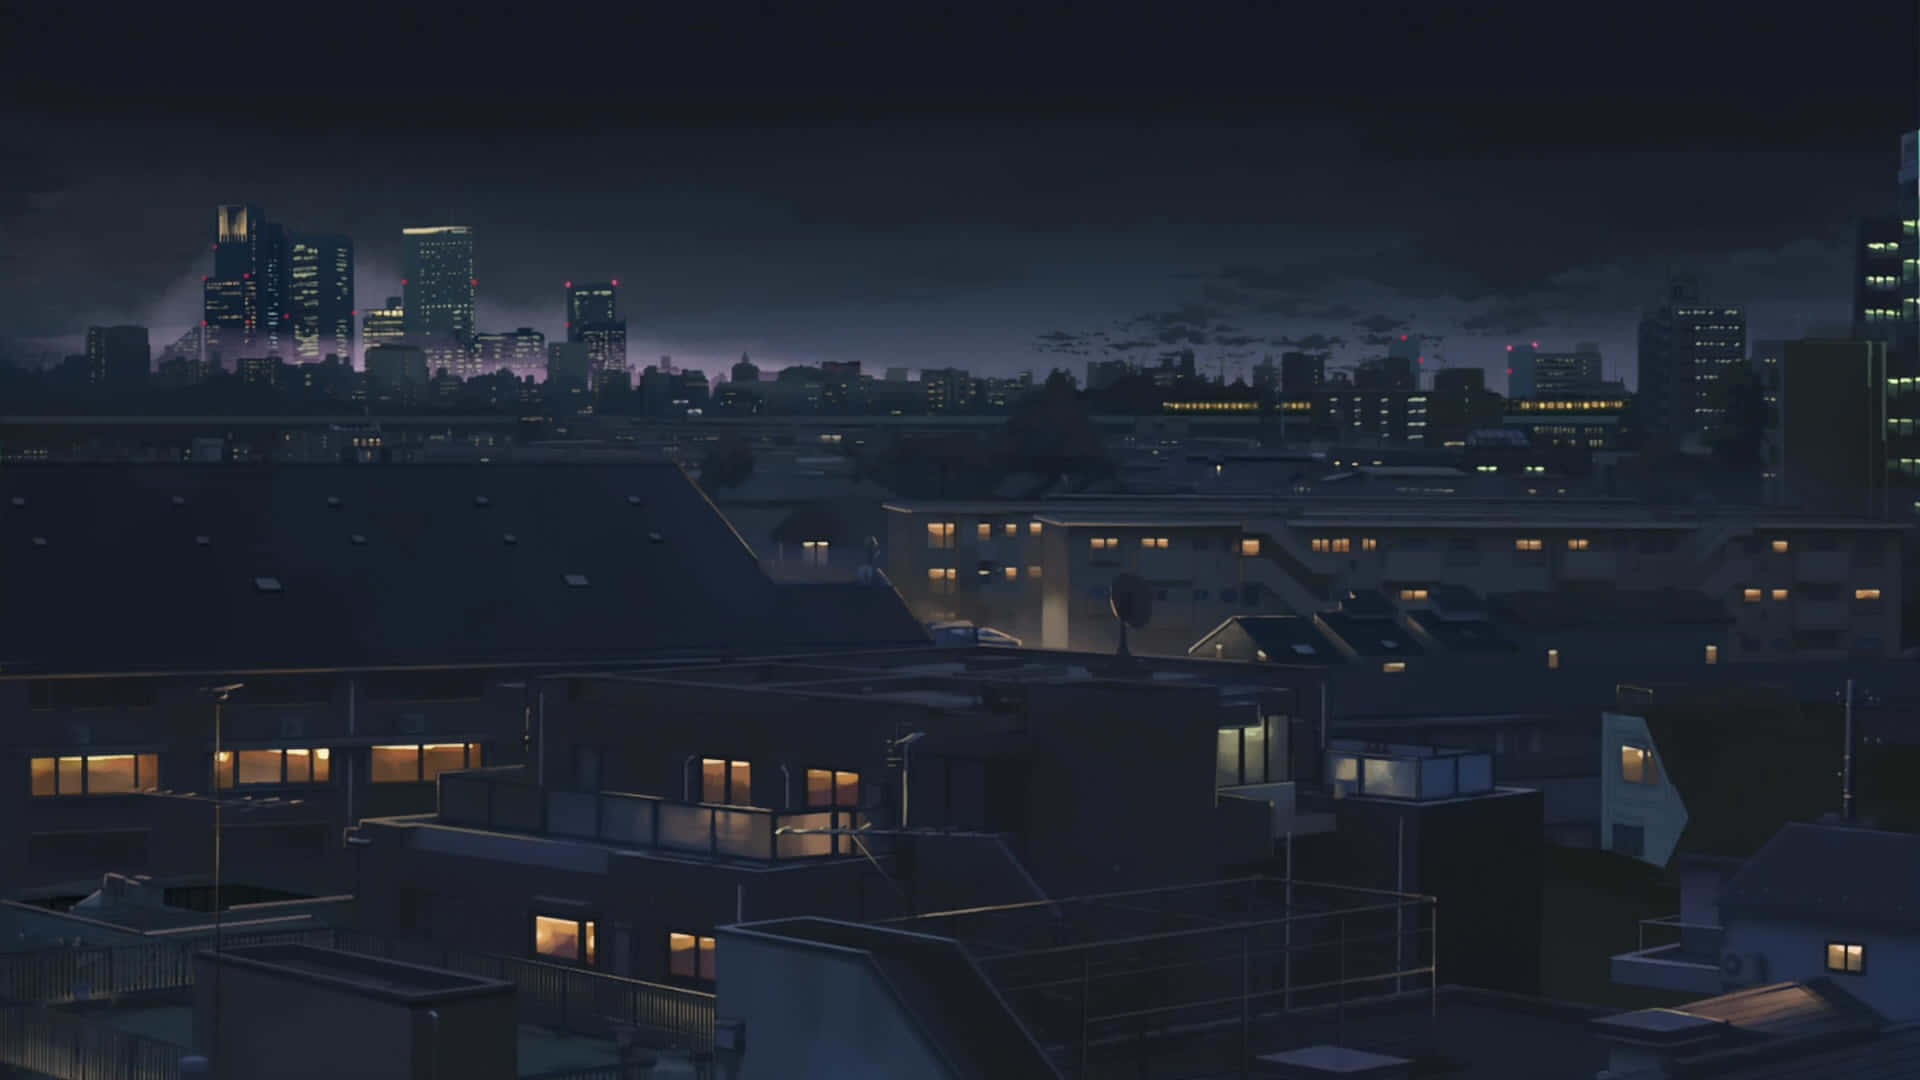 Neonlys oplyser de travle Anime-byens gader